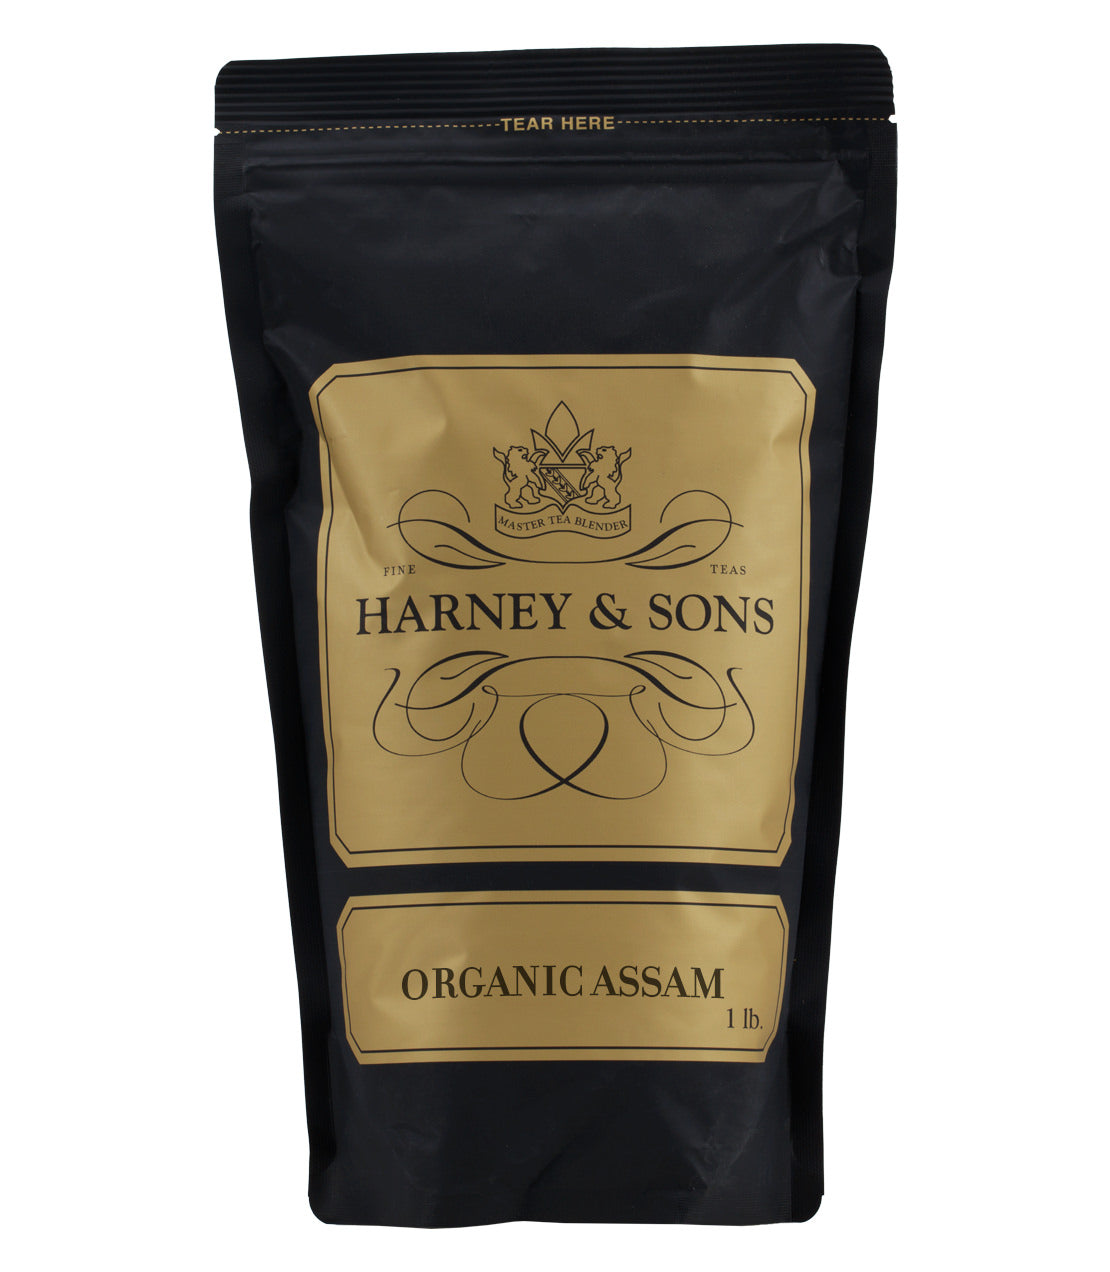 Organic Assam - Loose 1 lb. Bag - Harney & Sons Fine Teas